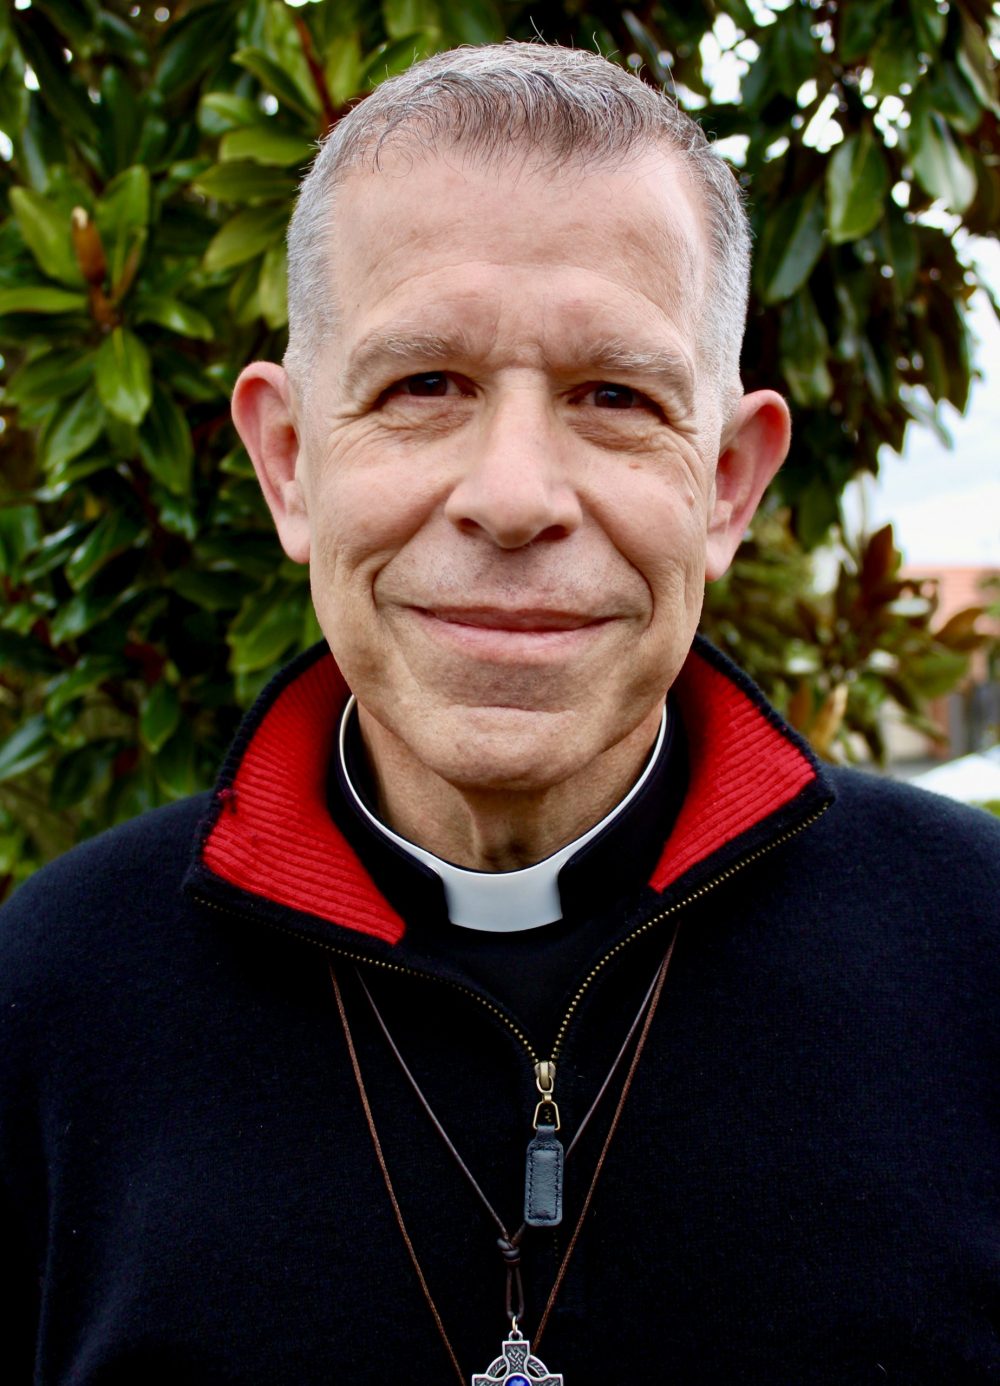 Rev Michael Brantley